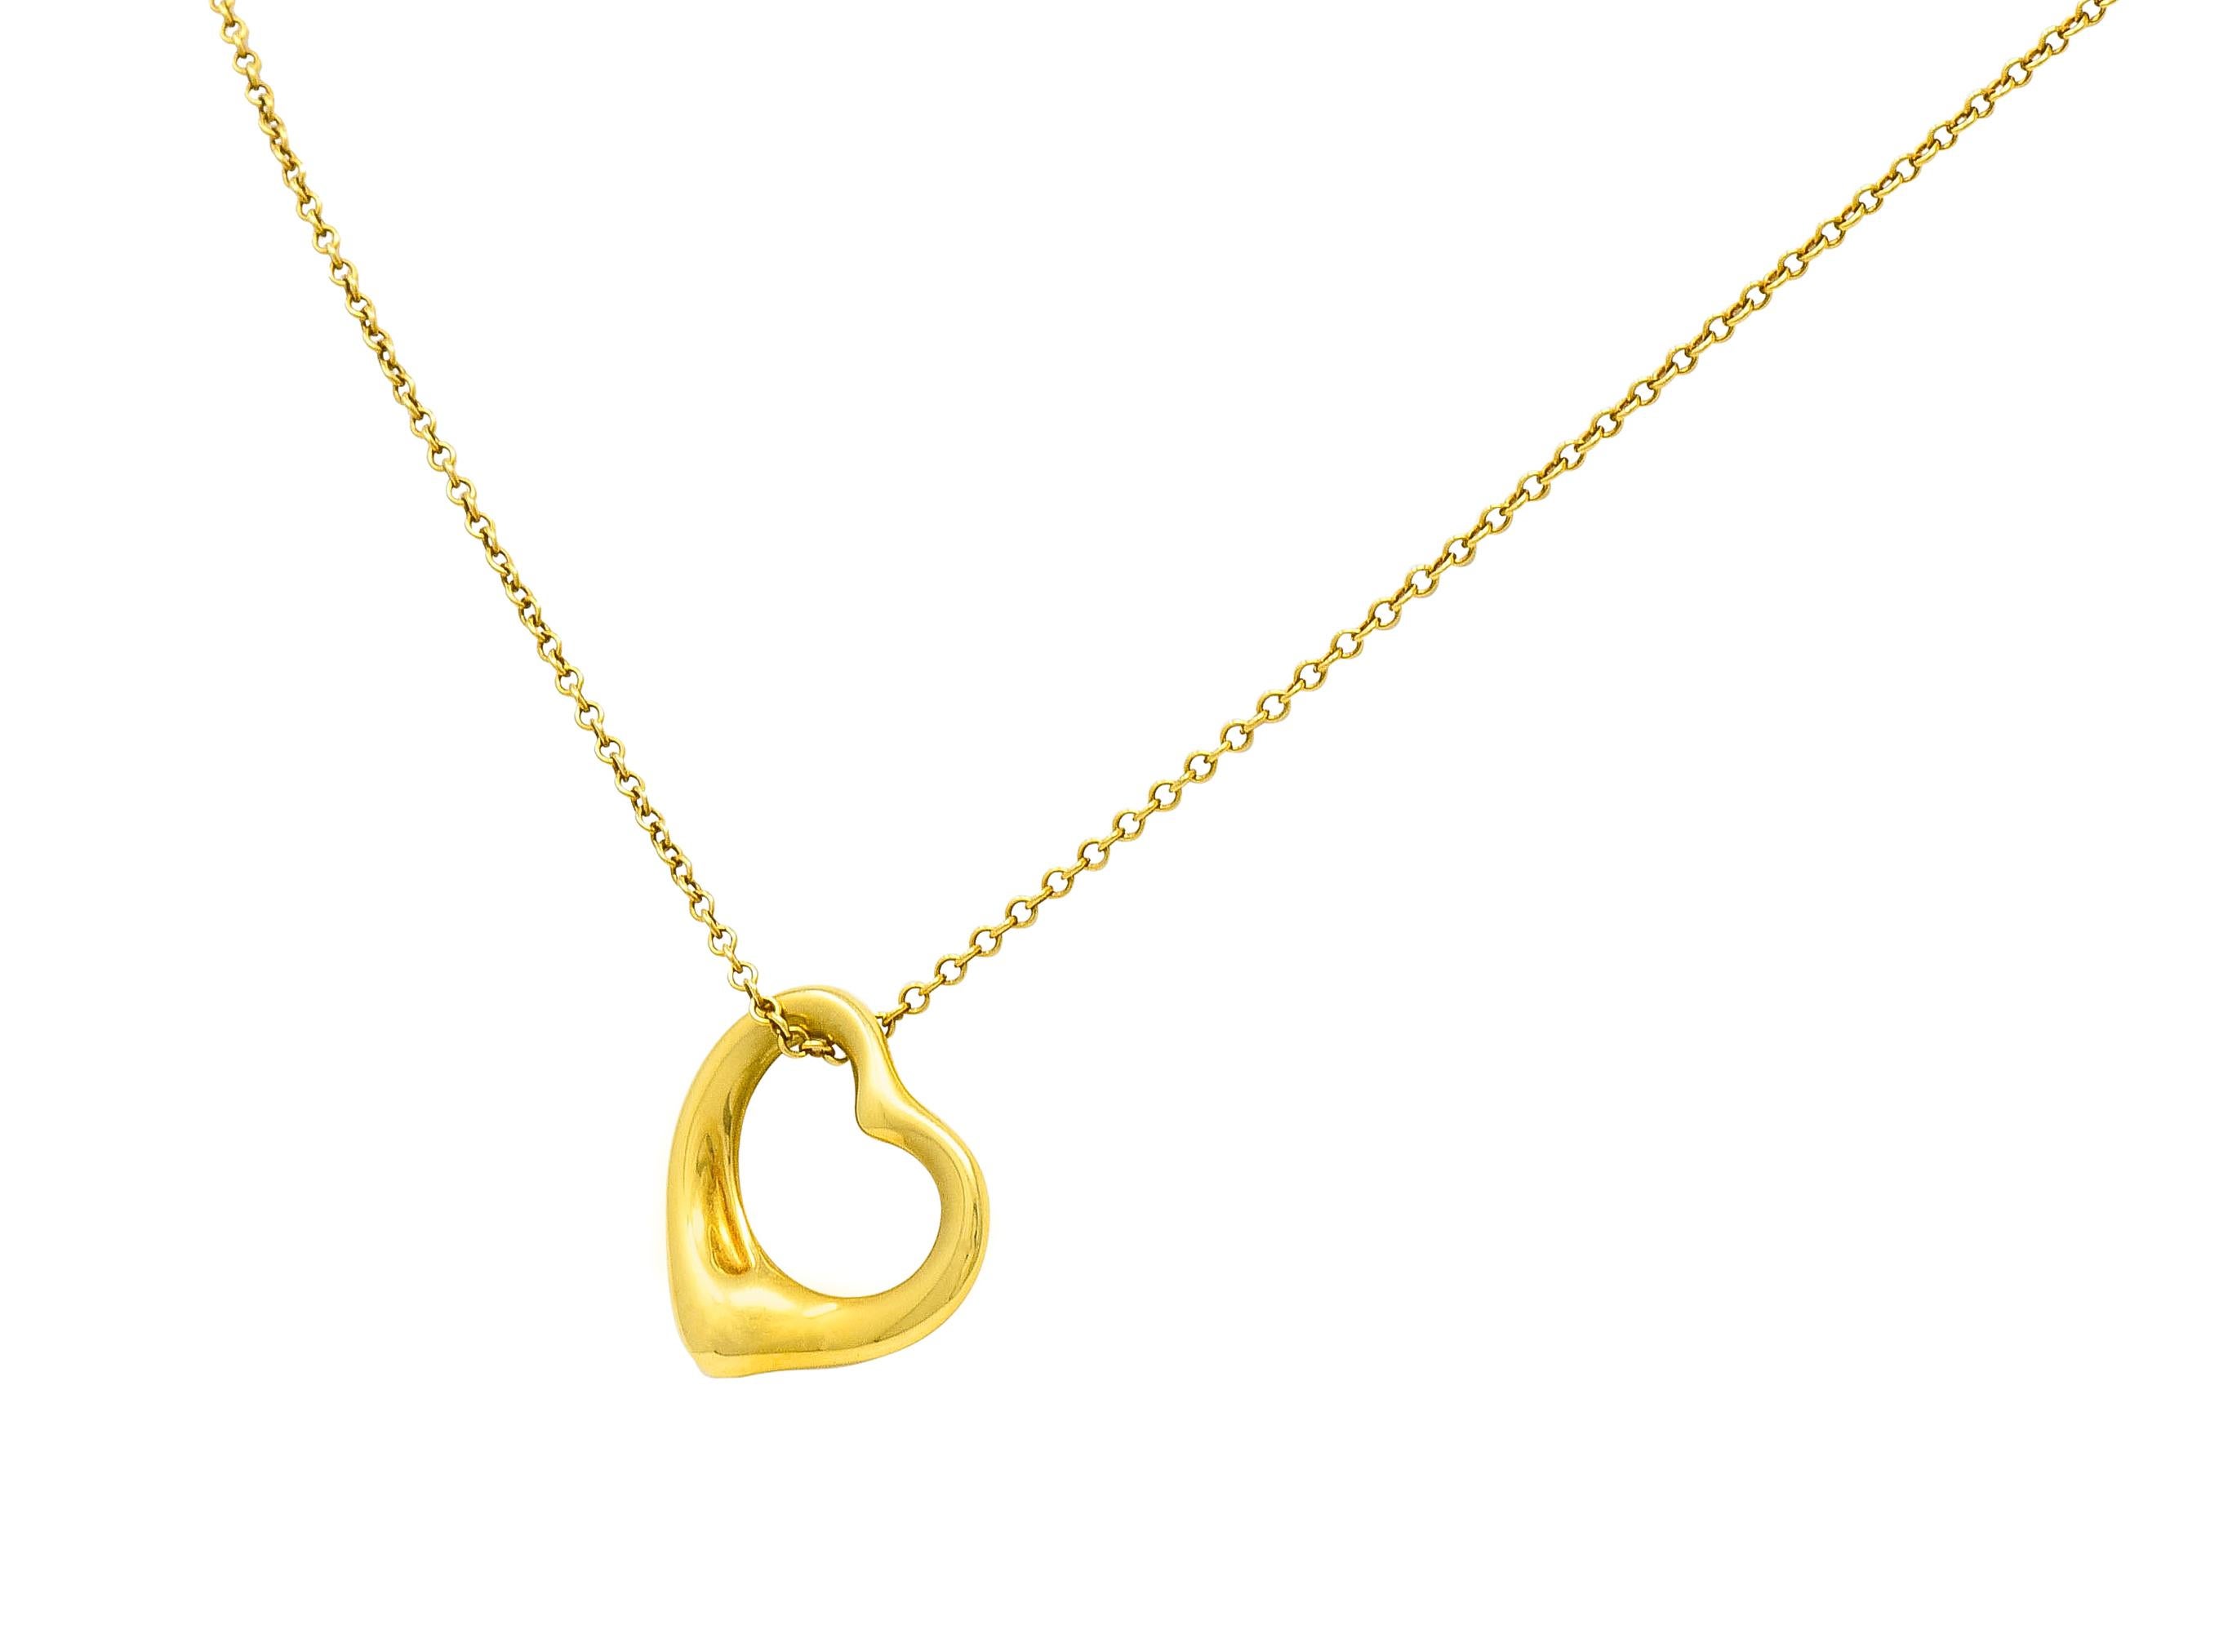 Contemporary Elsa Peretti Tiffany & Co. 18 Karat Yellow Gold Open Heart Pendant Necklace